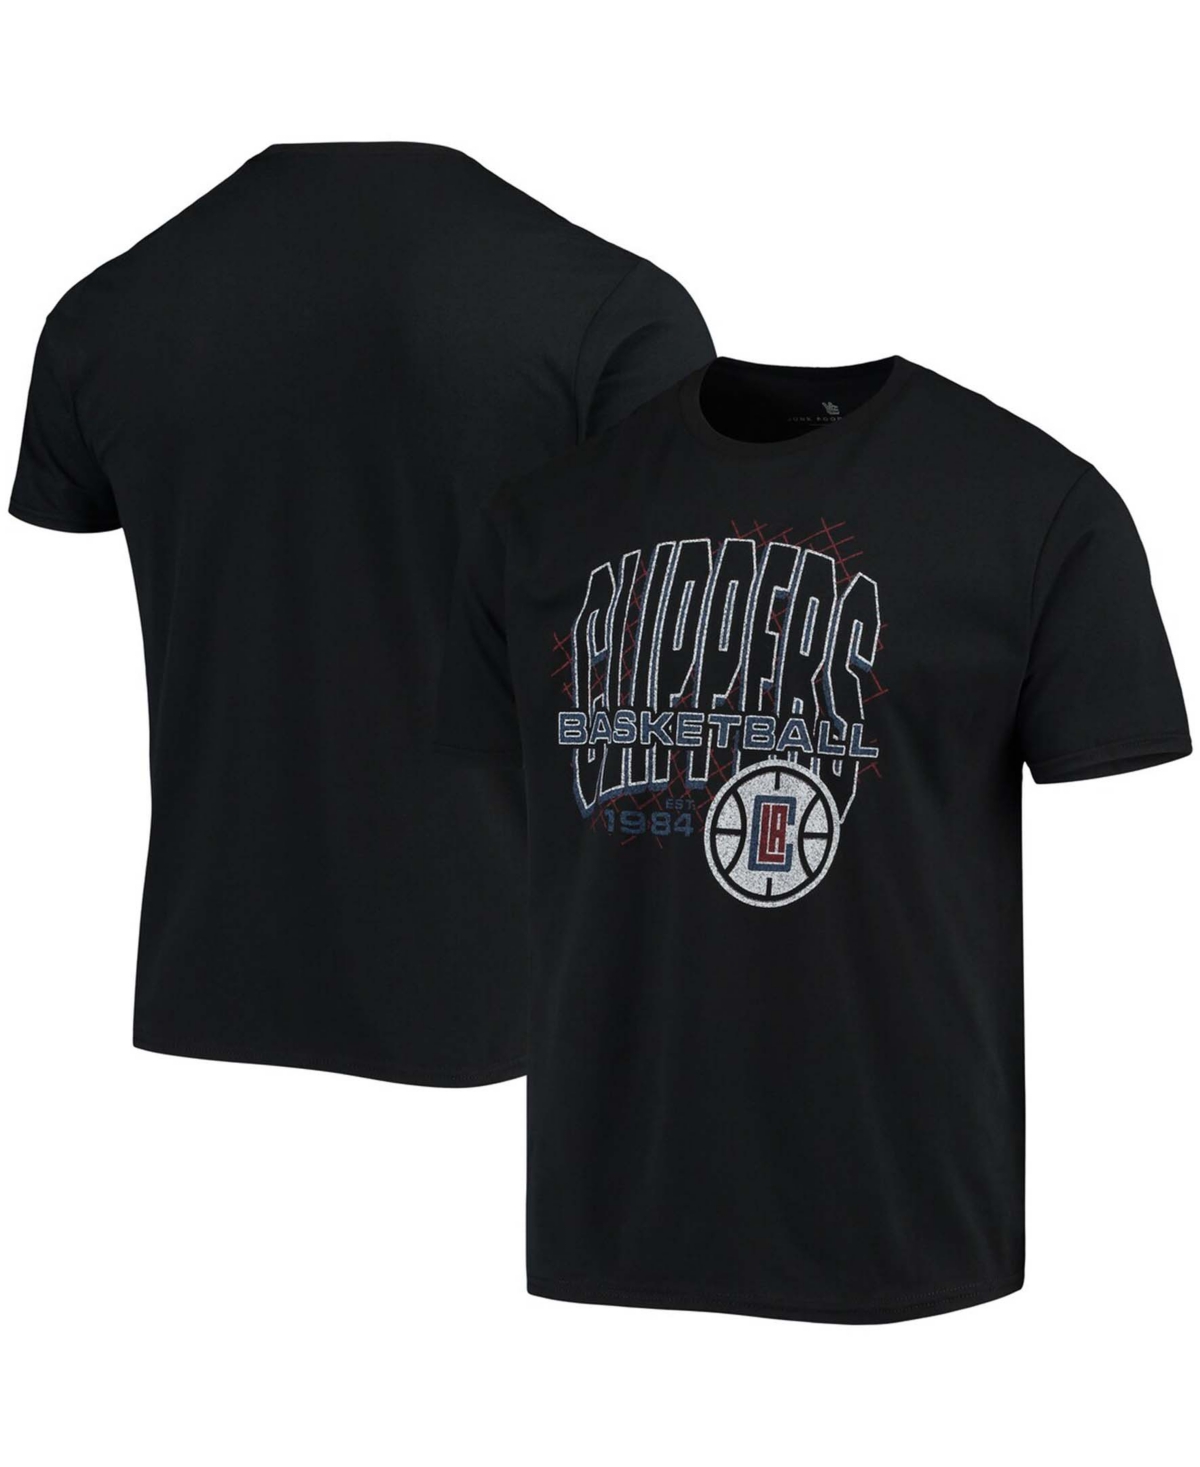 Men's Black La Clippers Playground T-shirt - Black